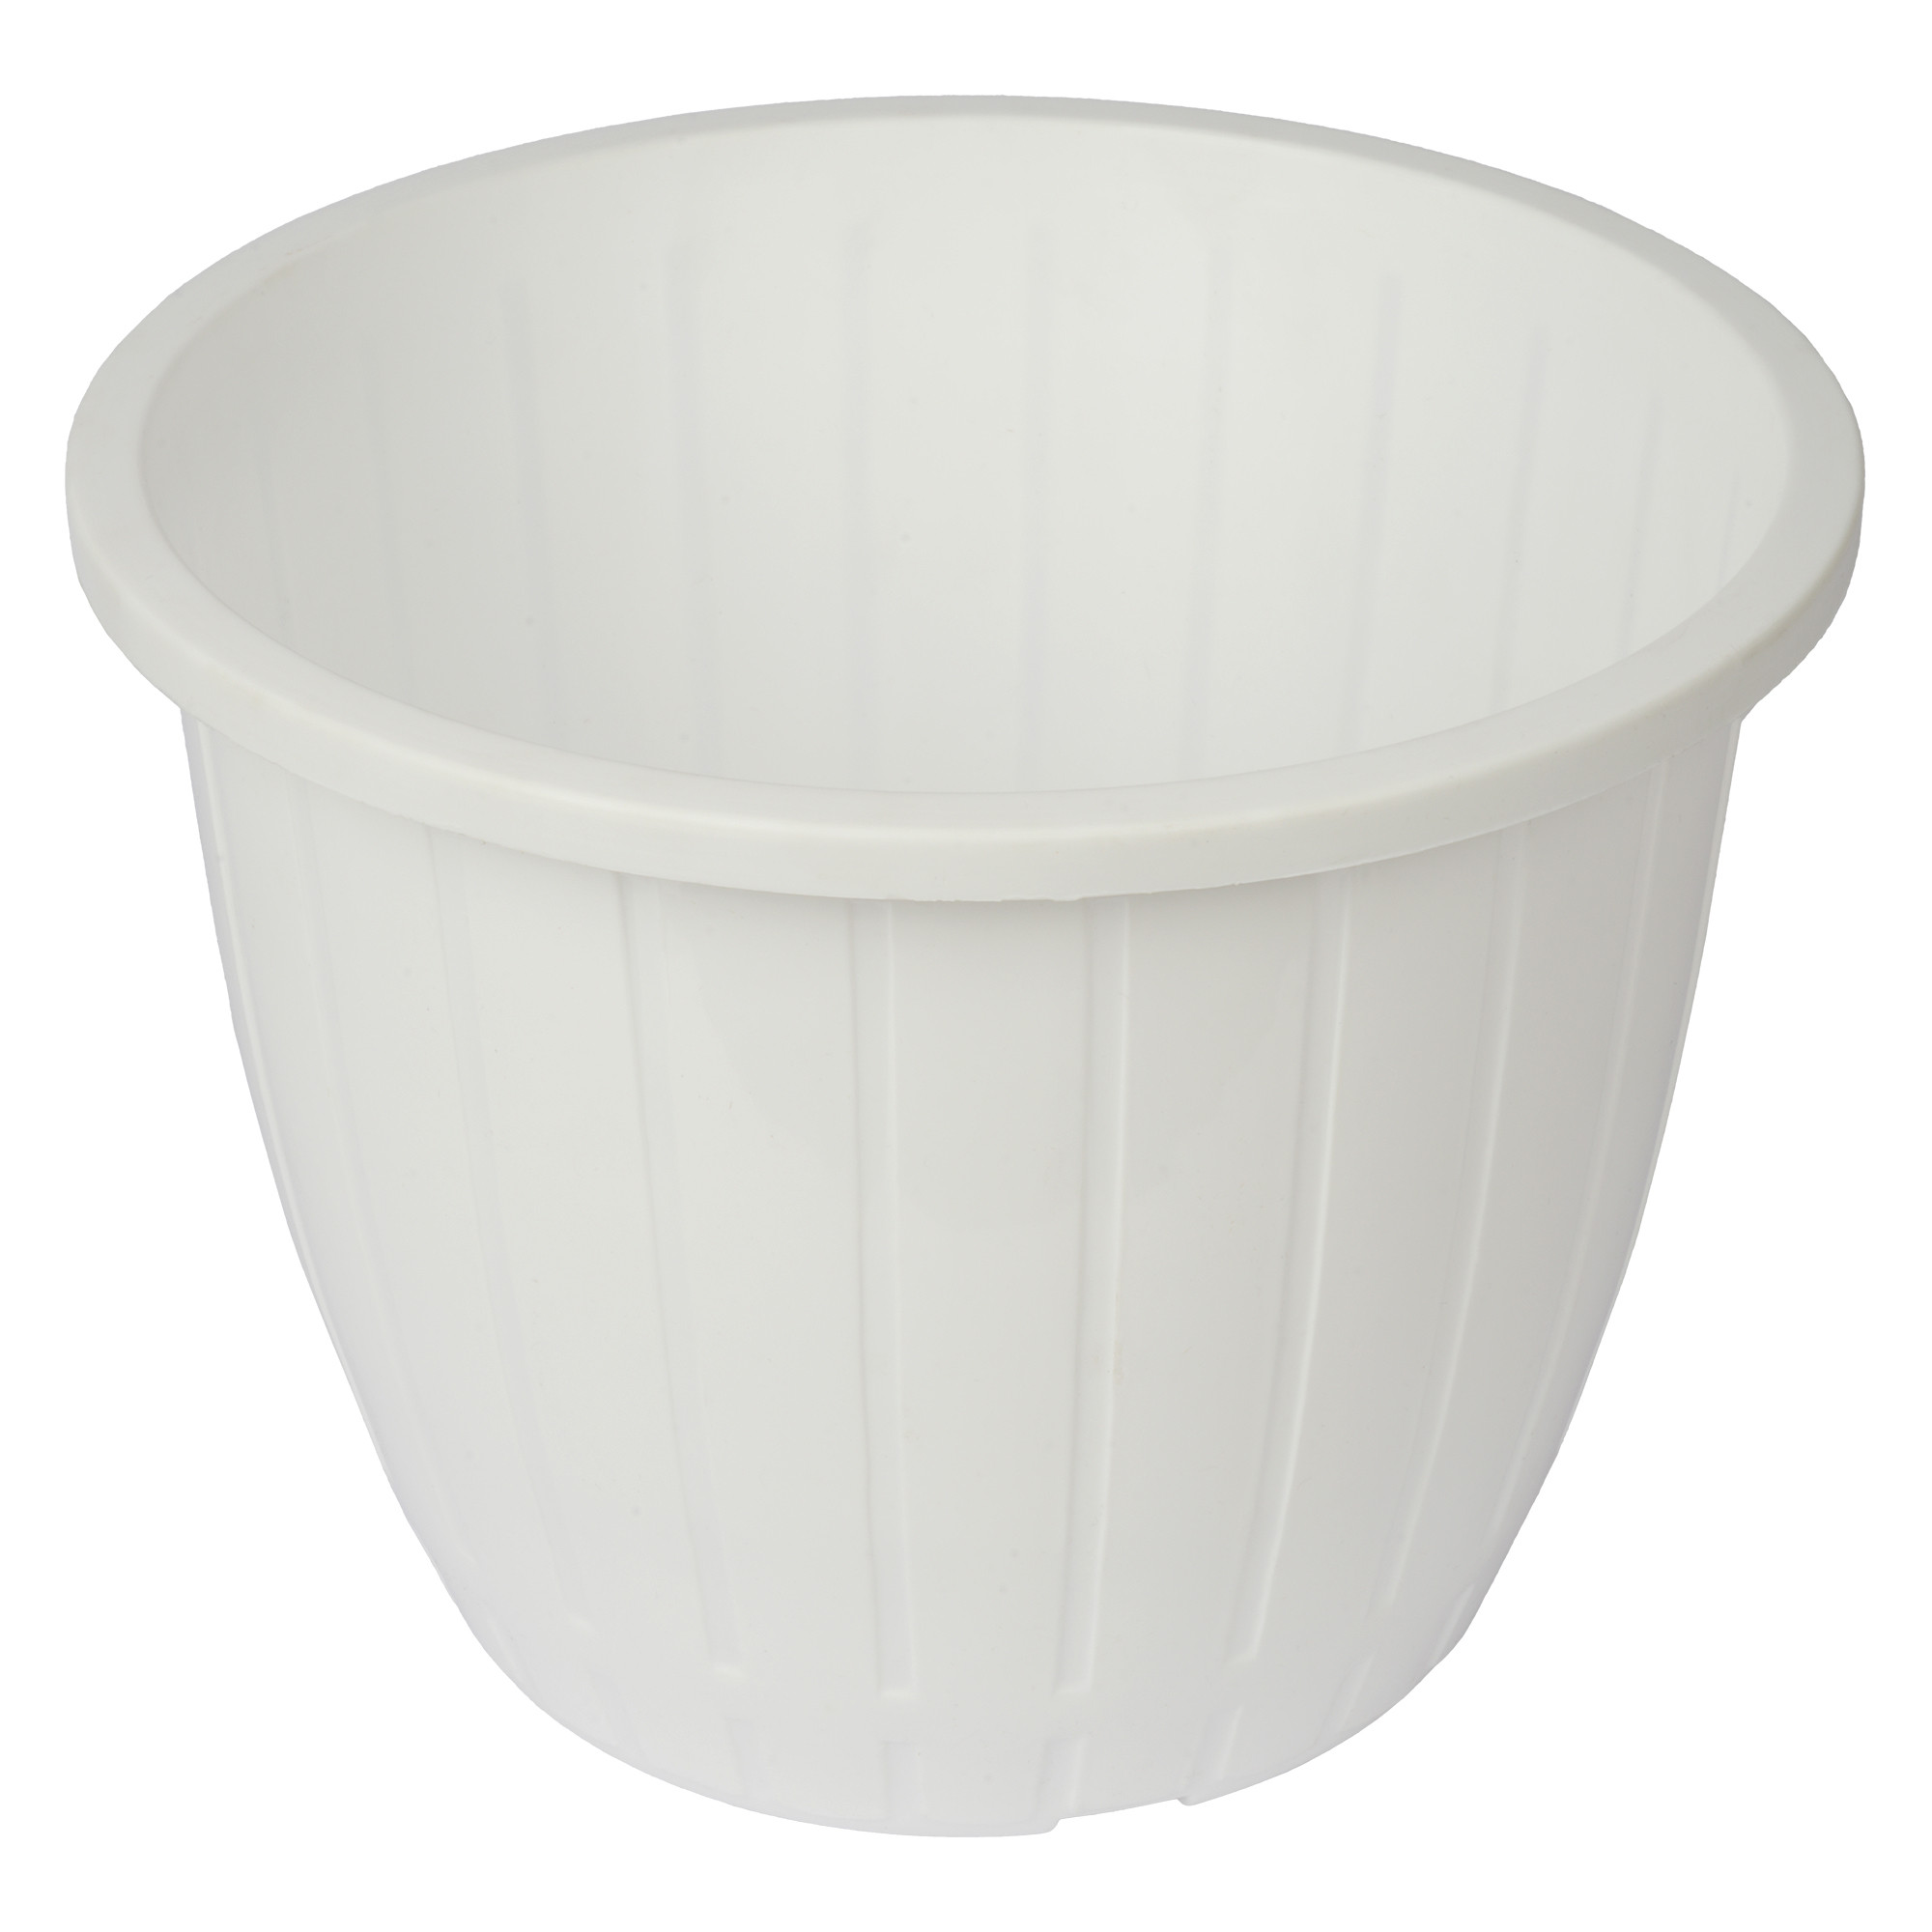 Kuber Industries Flower Pot | Flower Pots for Indoor & Outdoor | Plastic Pot for Gardening | Planter for Flower | Balcony Pots for Home Decor | Duro Flower Pot | 8 Inch | Pack of 2 | Multi